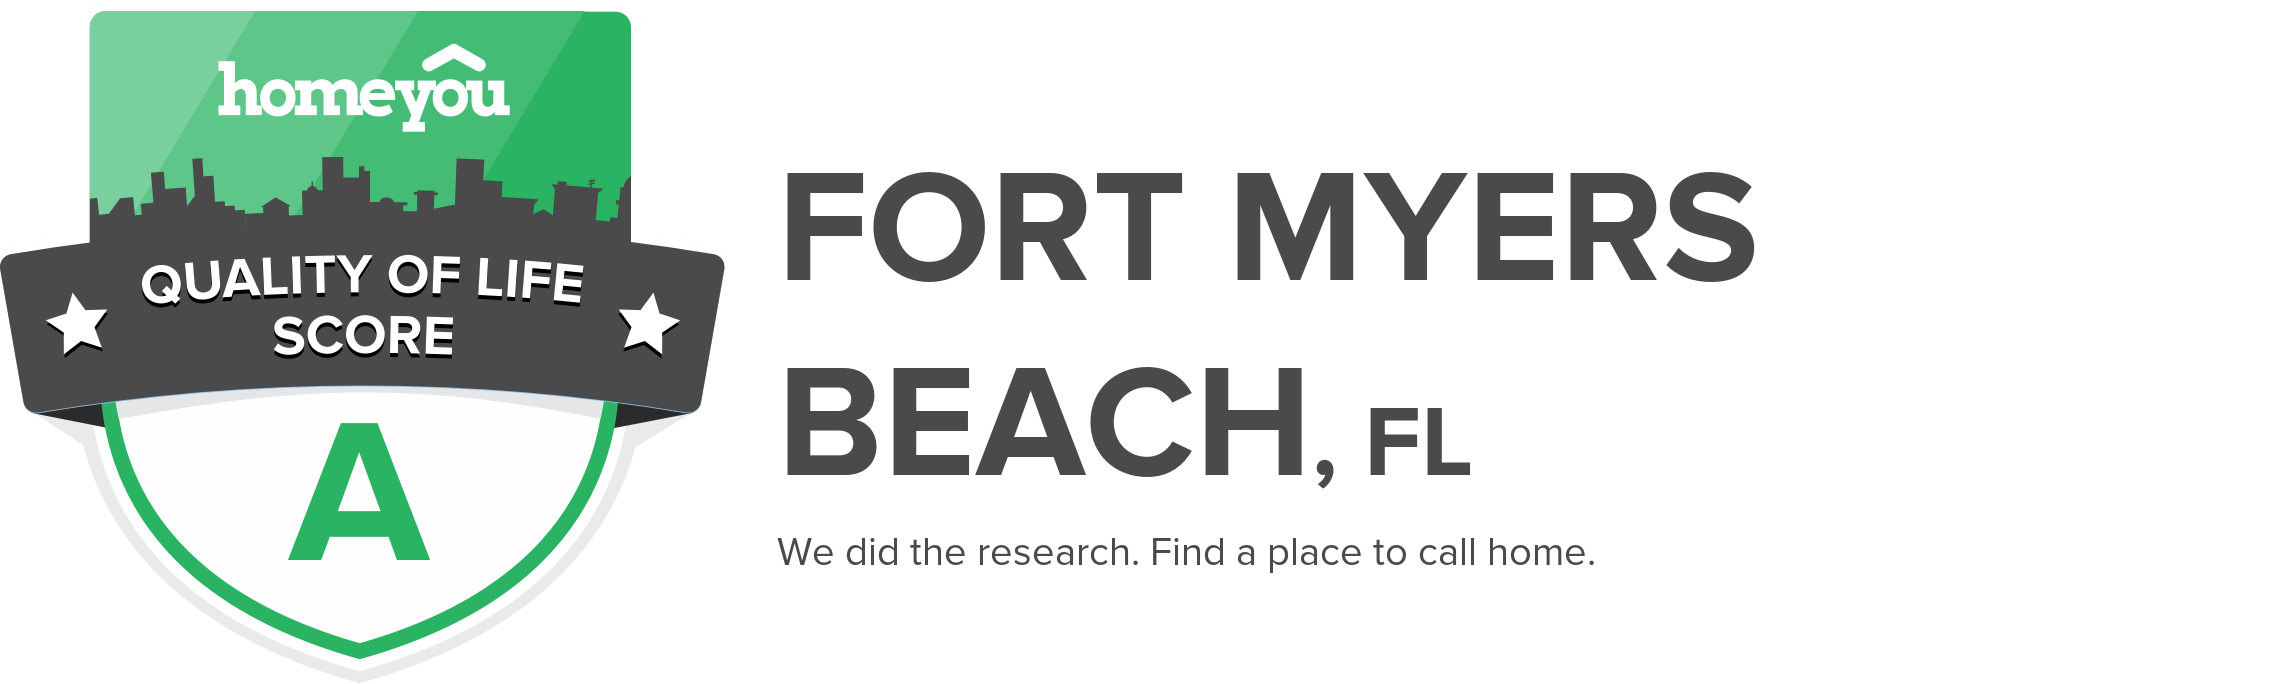 Fort Myers Beach, FL